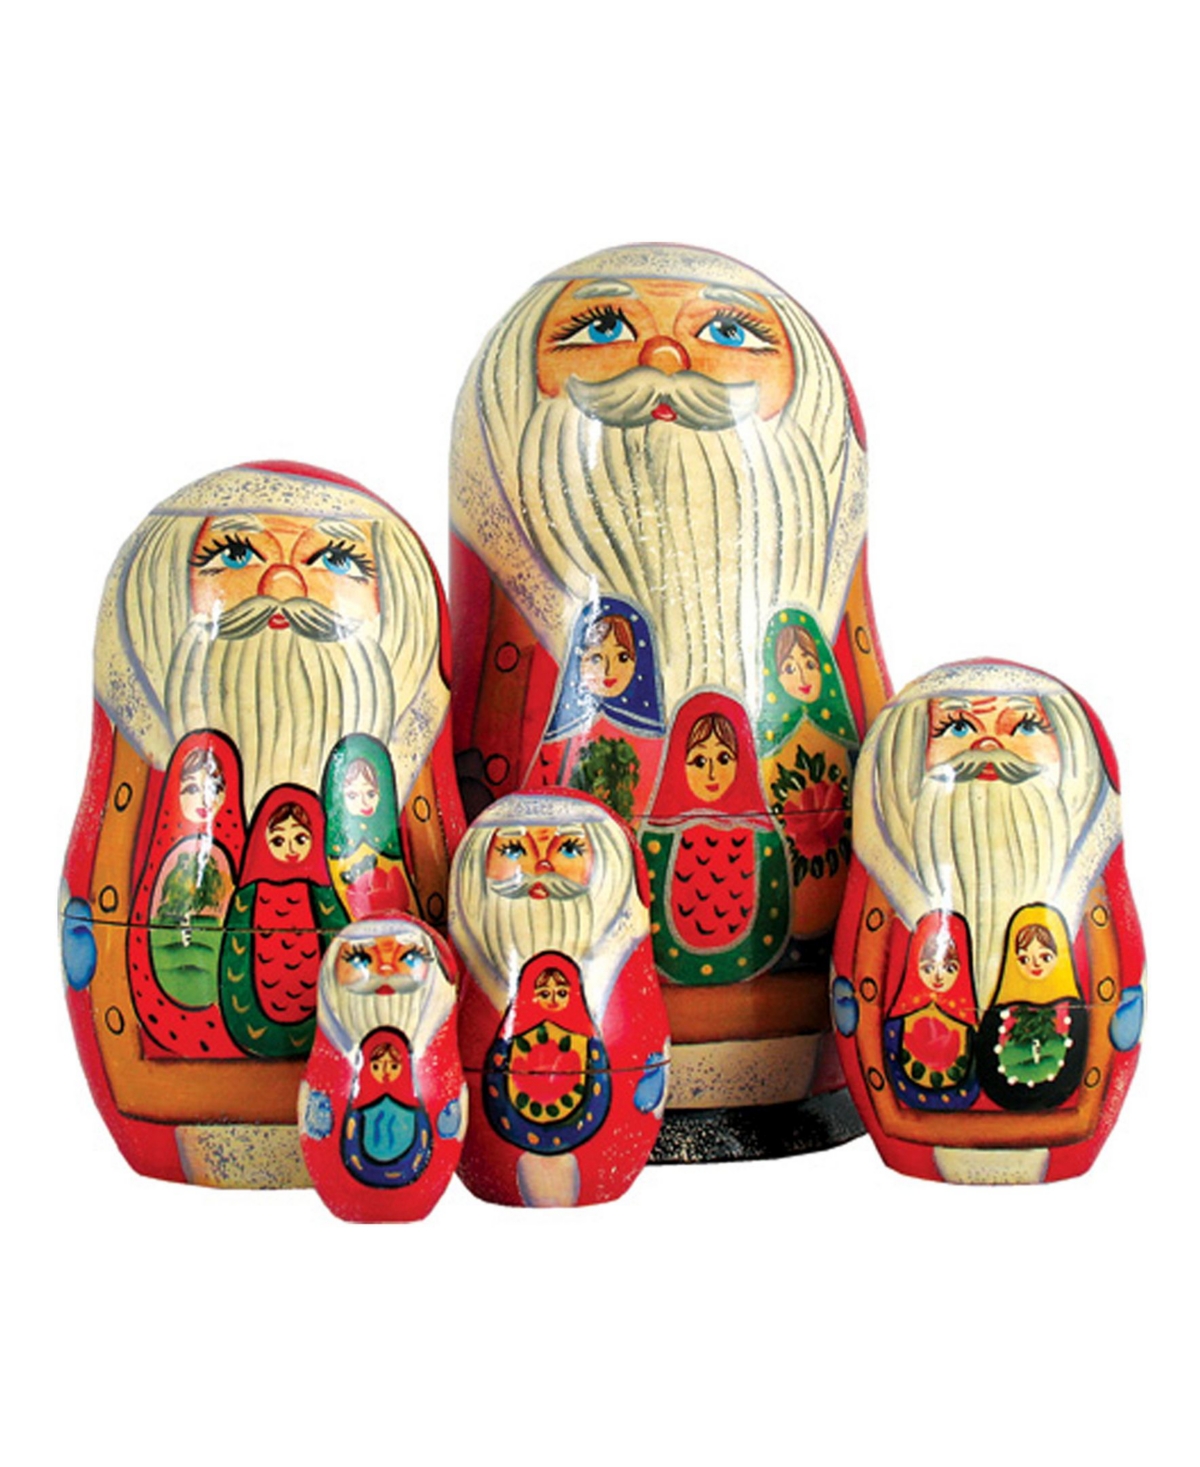 5 Piece Matreshkas Russian Matryoshka Nested Doll Set - Multi